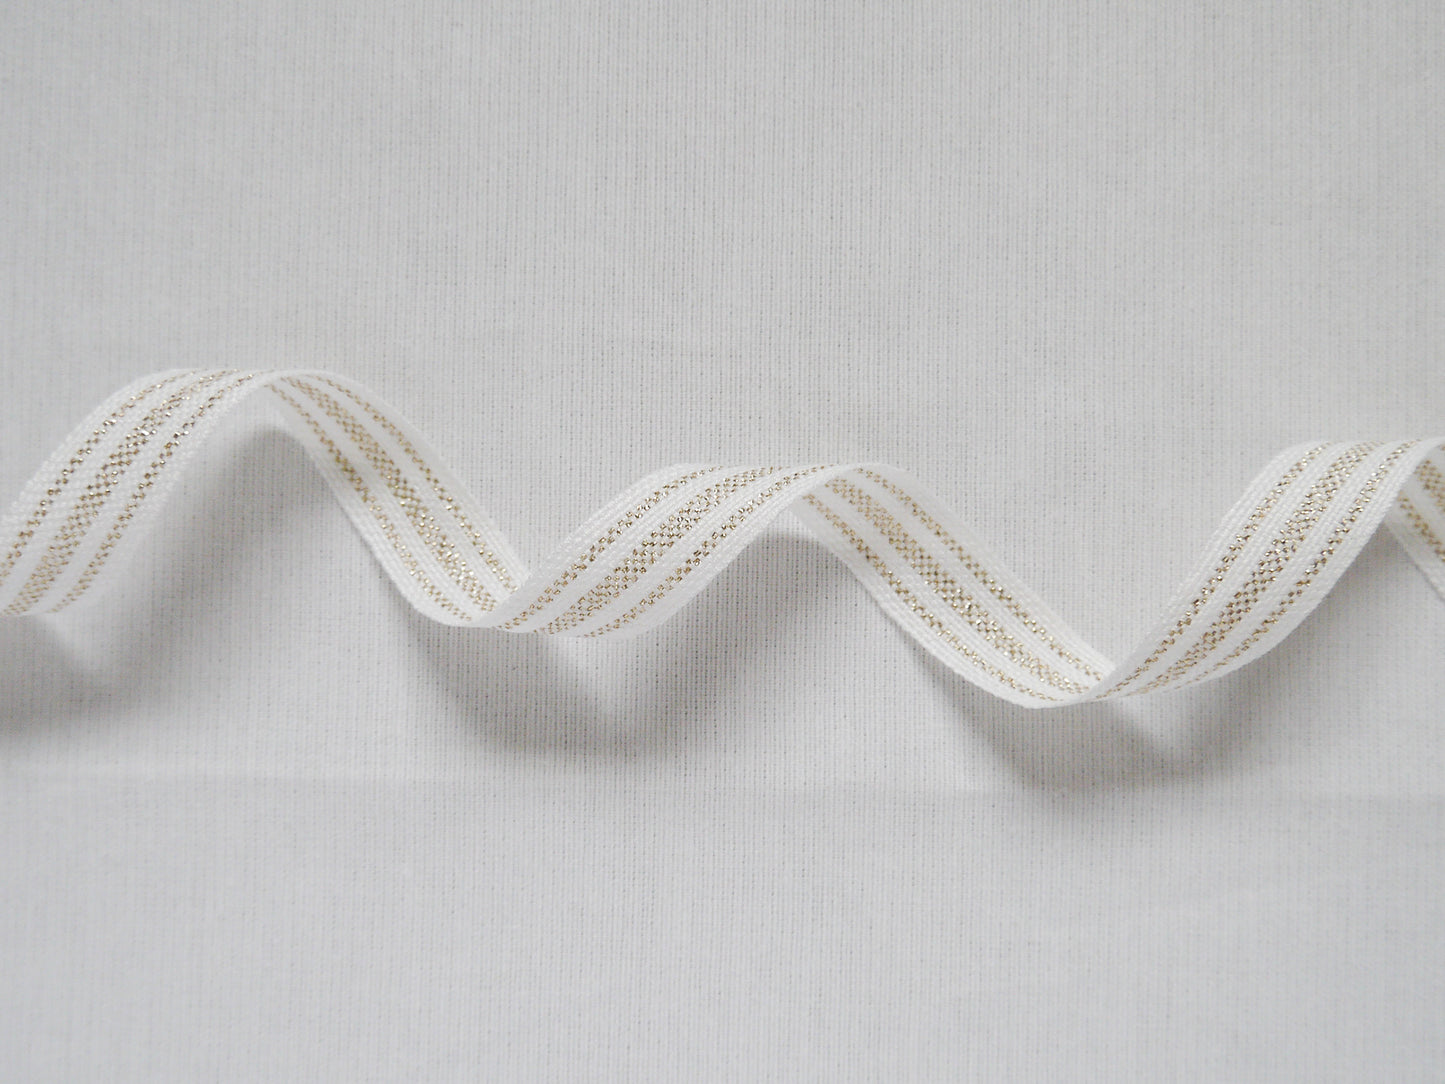 17mm stripe metallic ribbon/ tape in washed linen